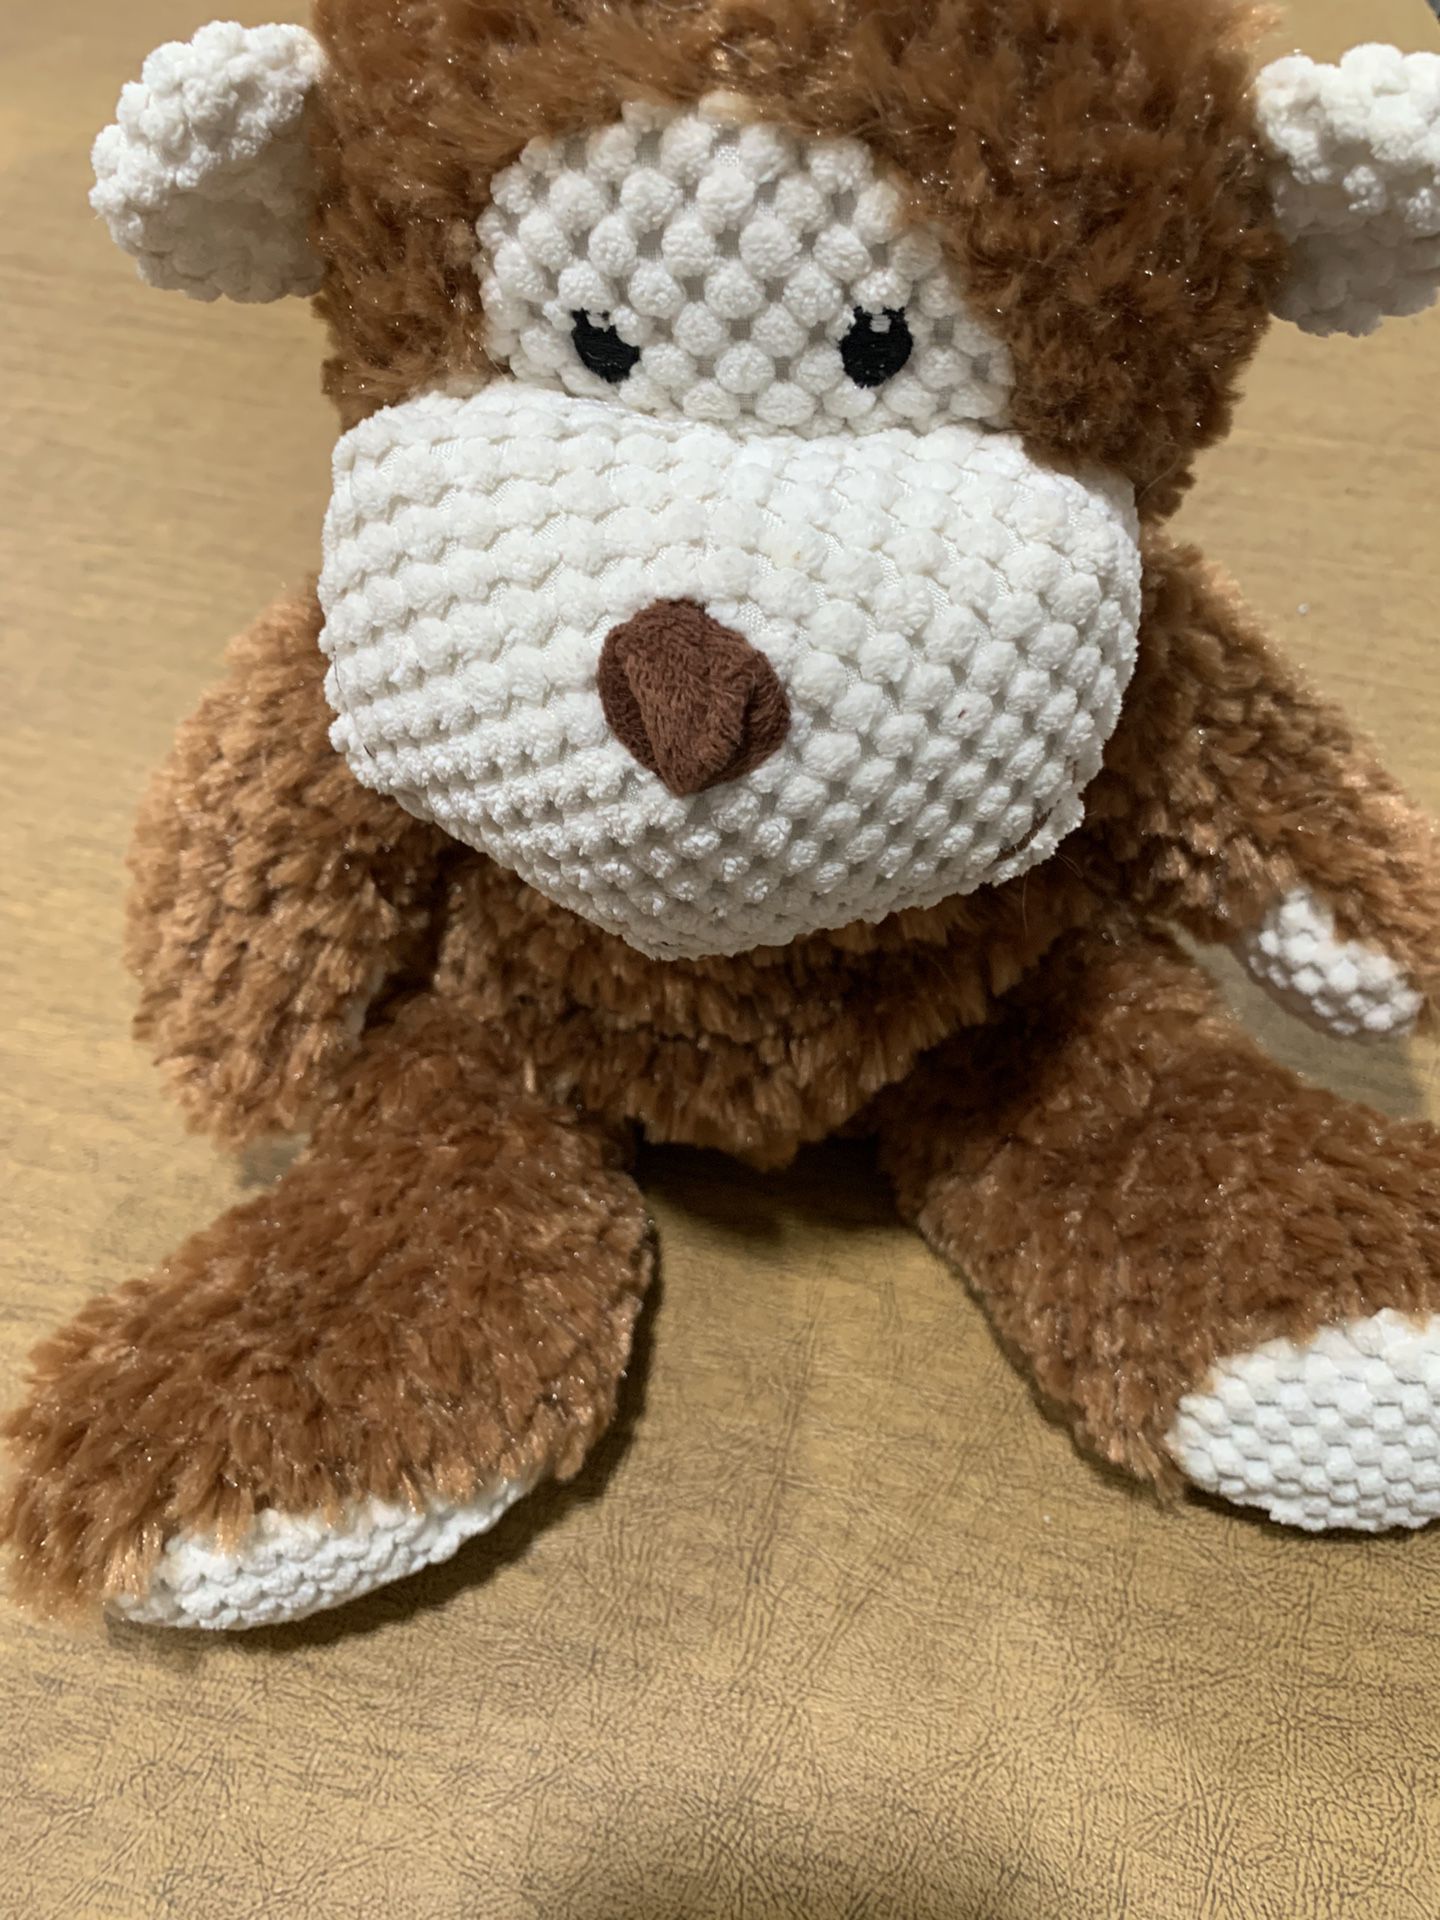 Monkey Stuffed Toy